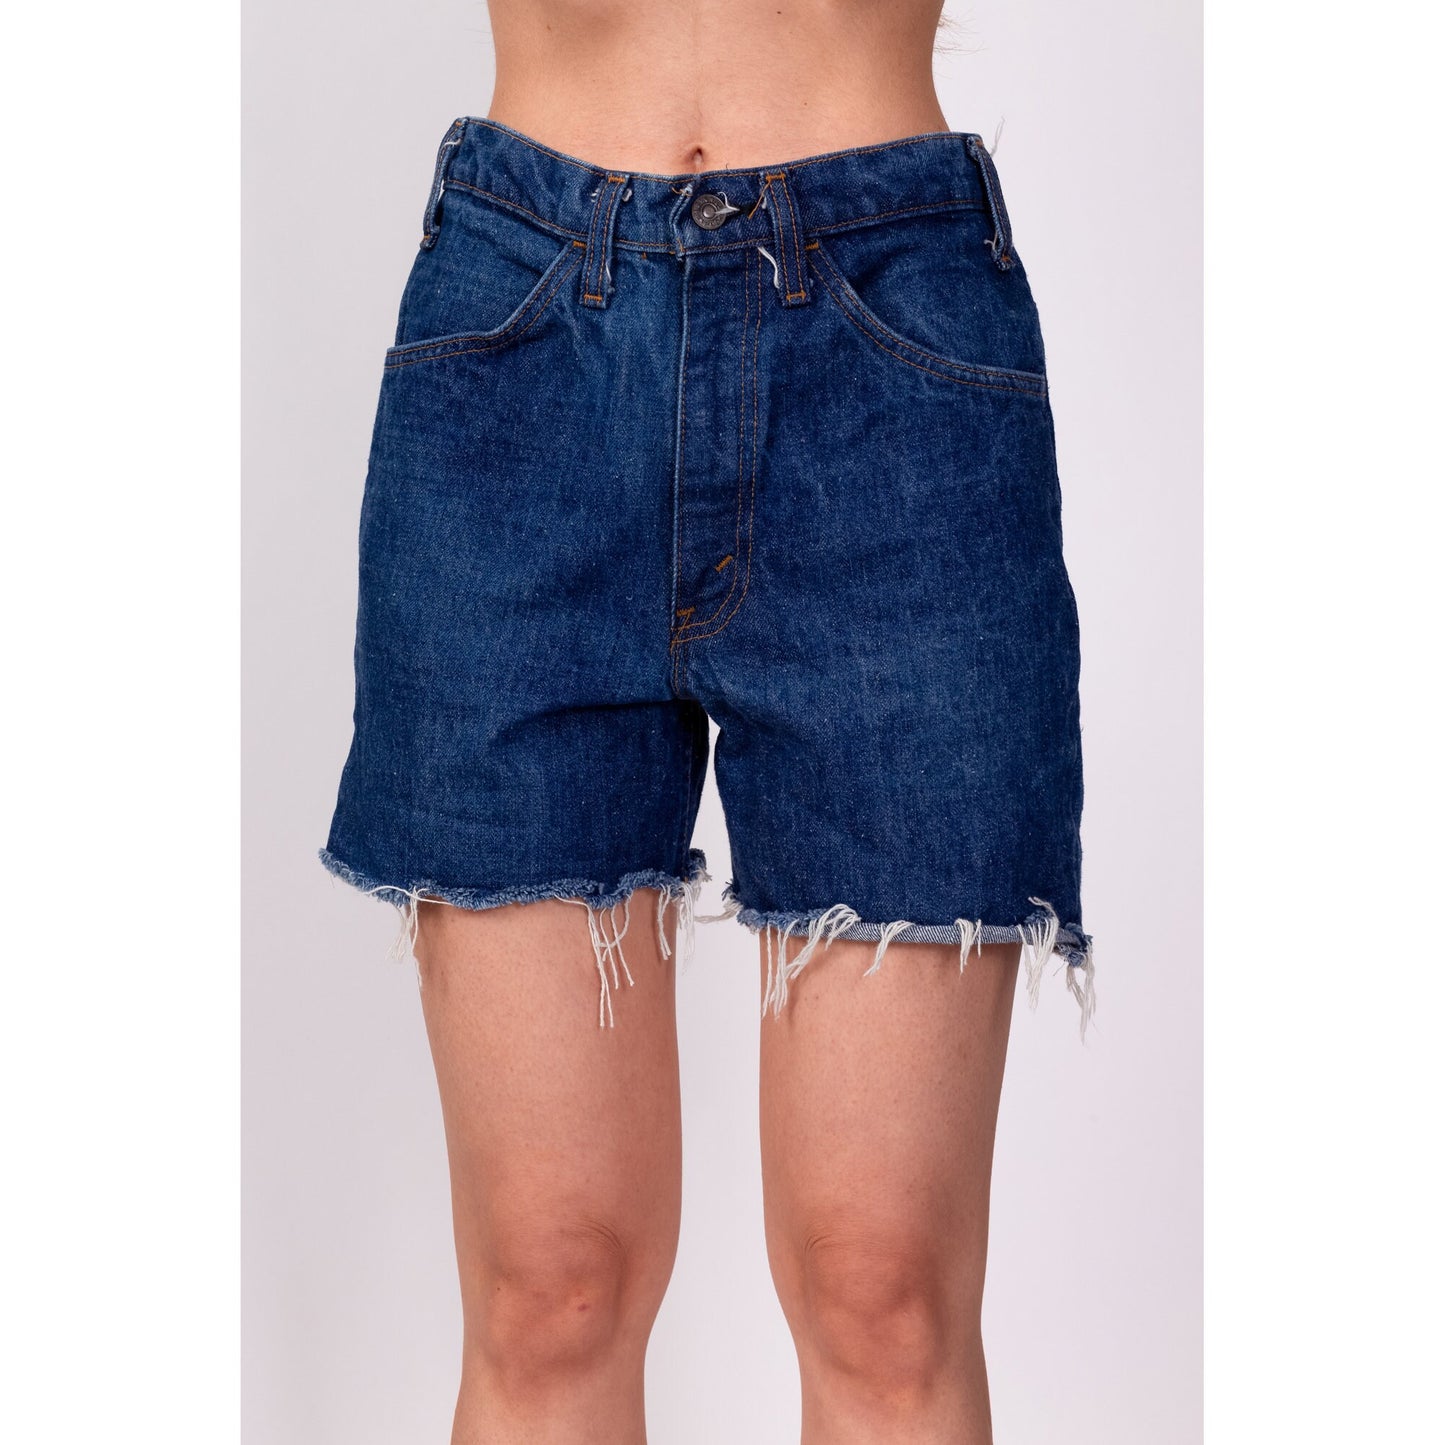 70s Cut Off Jean Shorts - Men's XS 